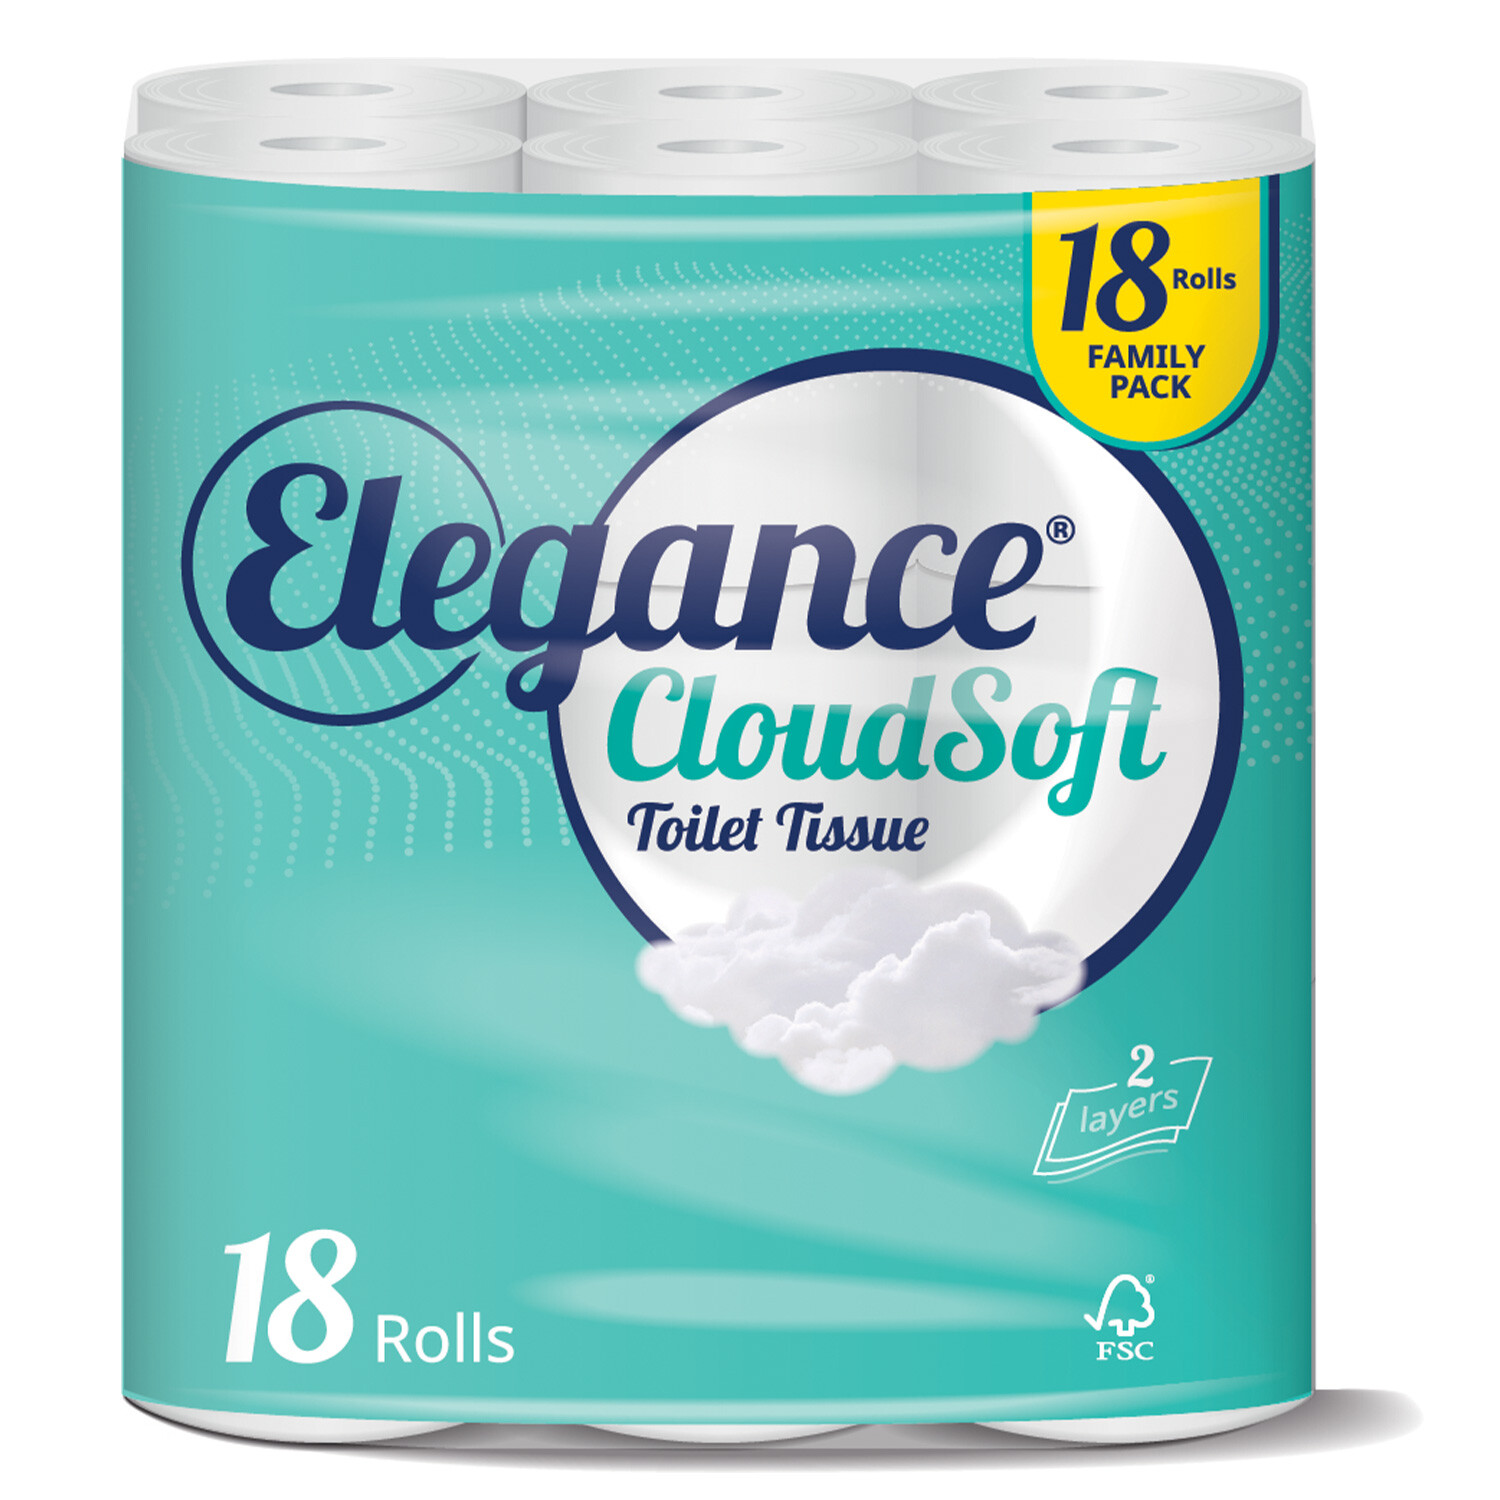 Elegance Cloudsoft Toilet Tissue Image